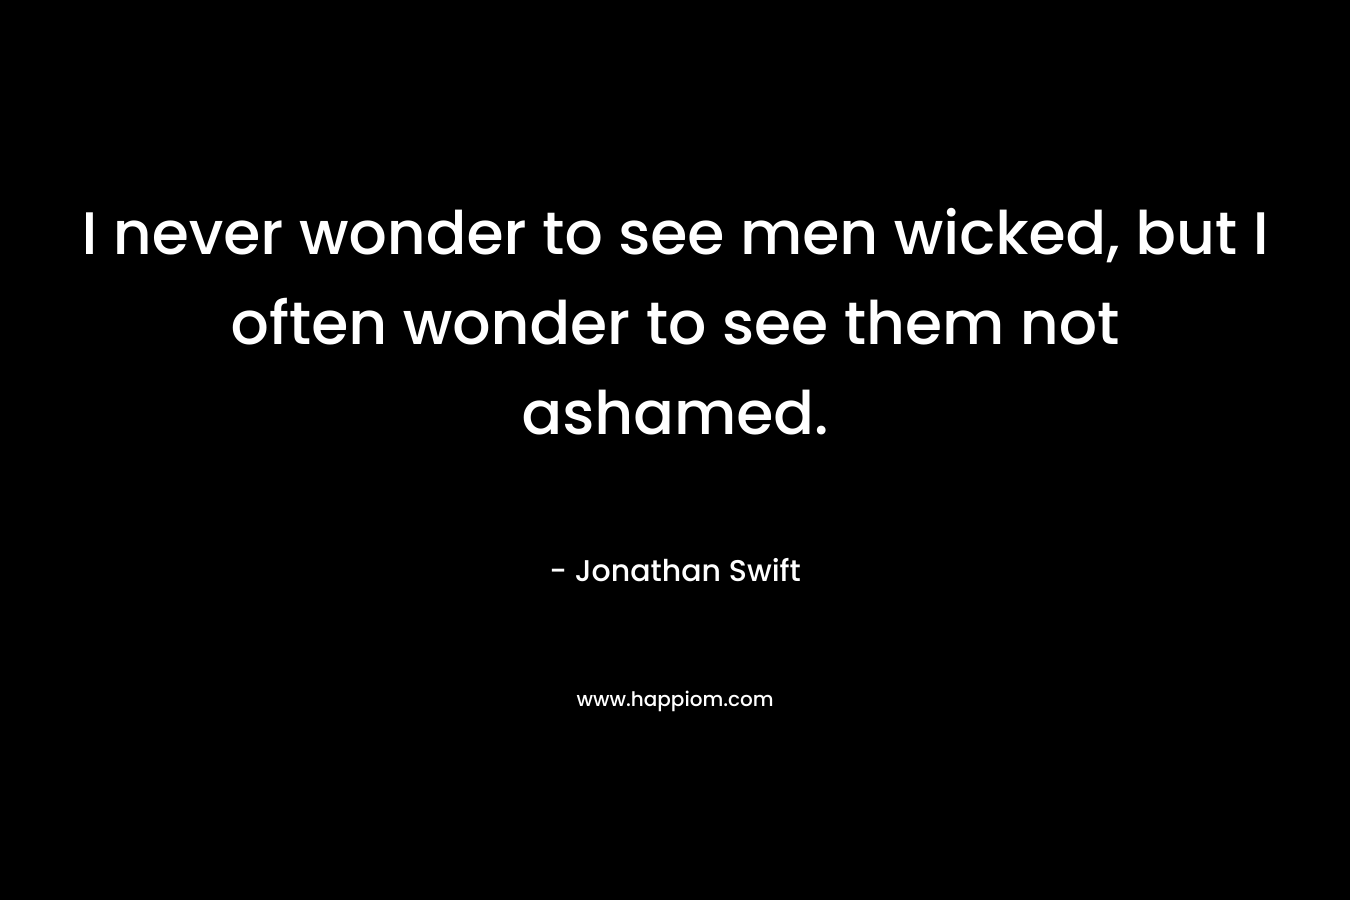 I never wonder to see men wicked, but I often wonder to see them not ashamed.